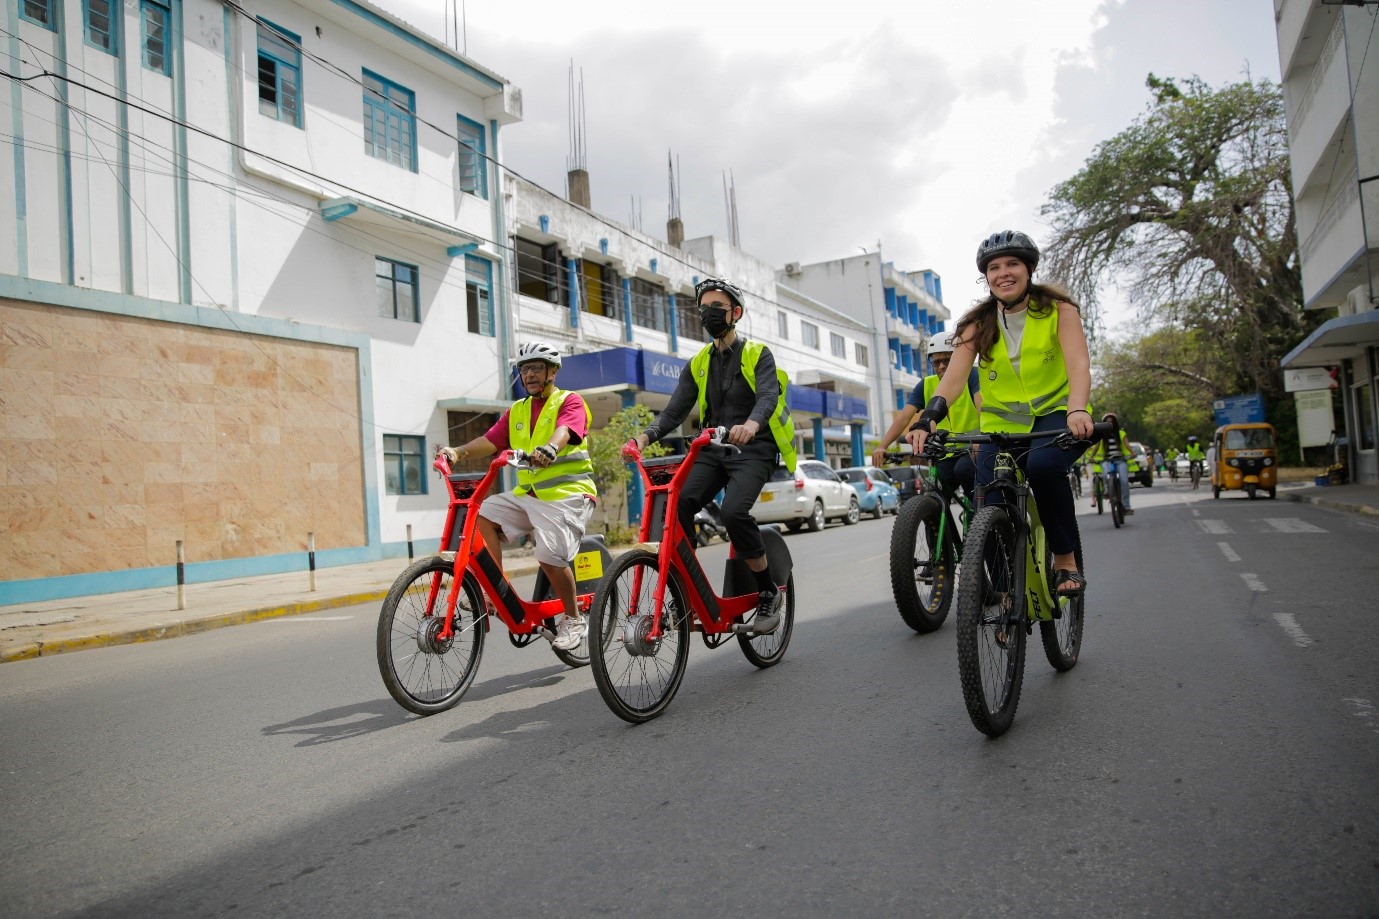 From left to right, Vipul Patel (County government of Mombasa), Chris Kost (ITDP) and Janene Tuniz (UN-Habitat) cycle on the streets of Mombasa  Photo: Simon Onyango Odhiambo